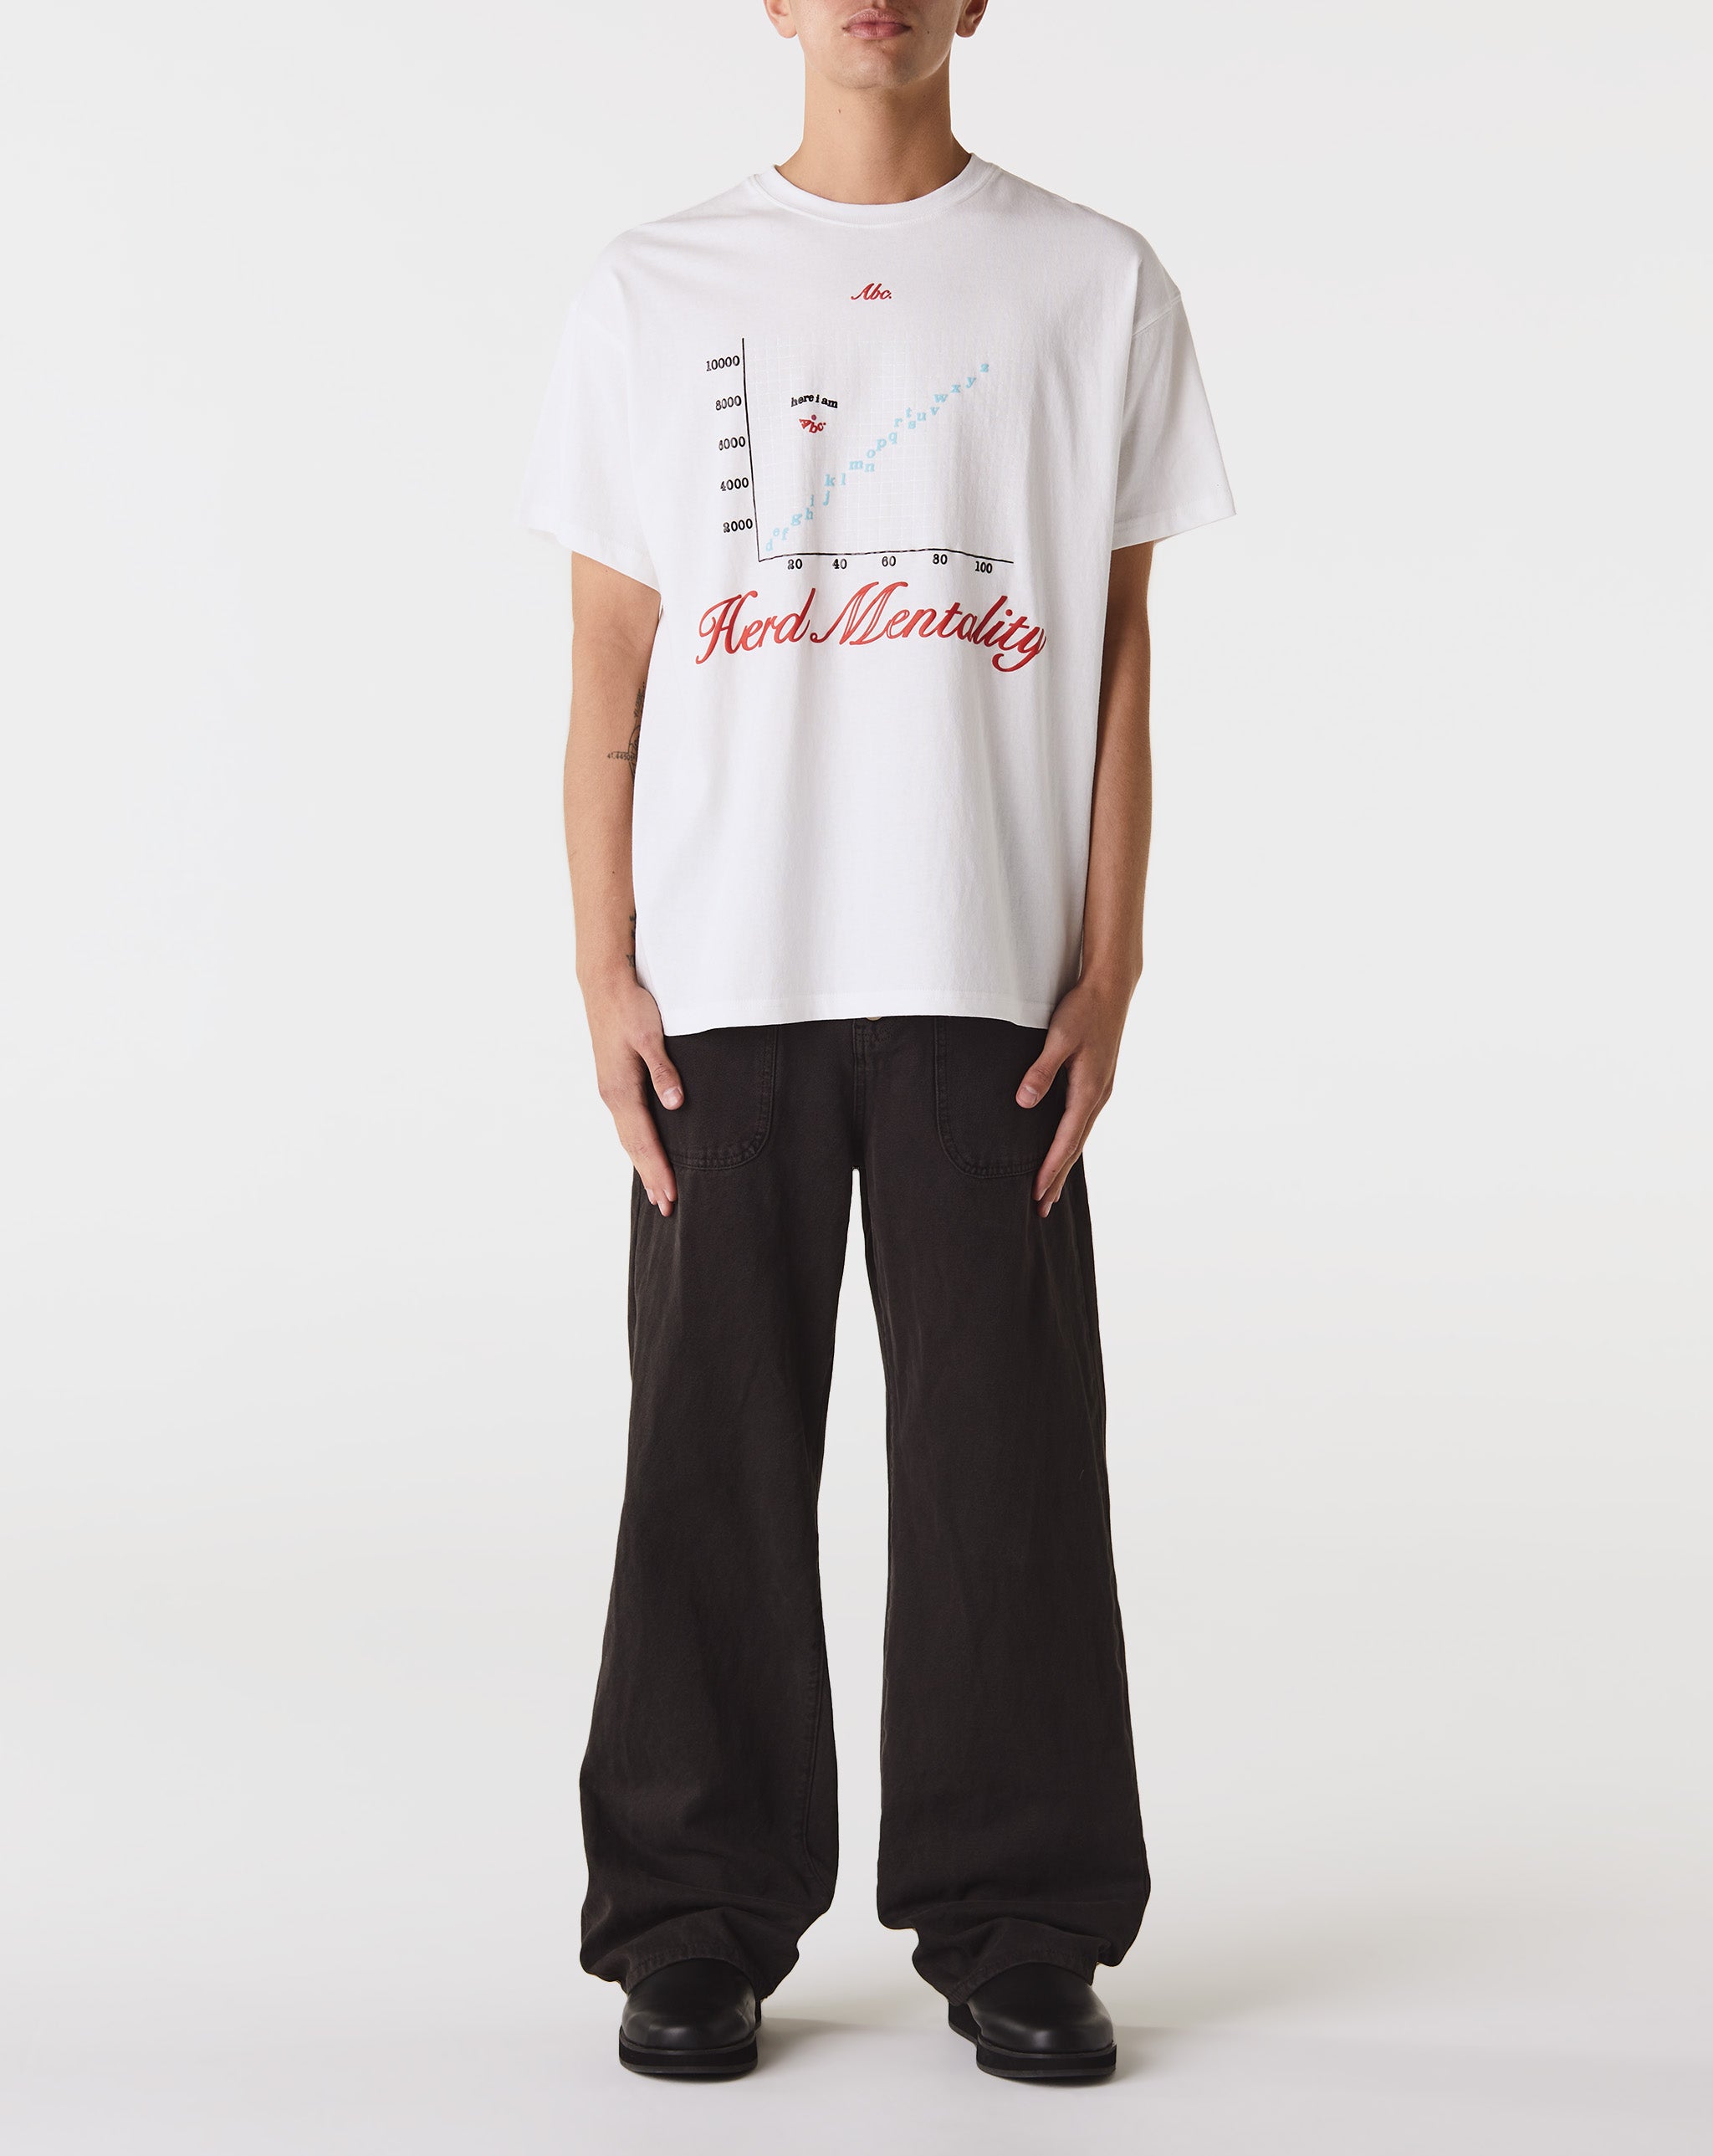 jordan RED 23 7-sko til mindre børn sort Herd Mentality T-Shirt  - Cheap Urlfreeze Jordan outlet